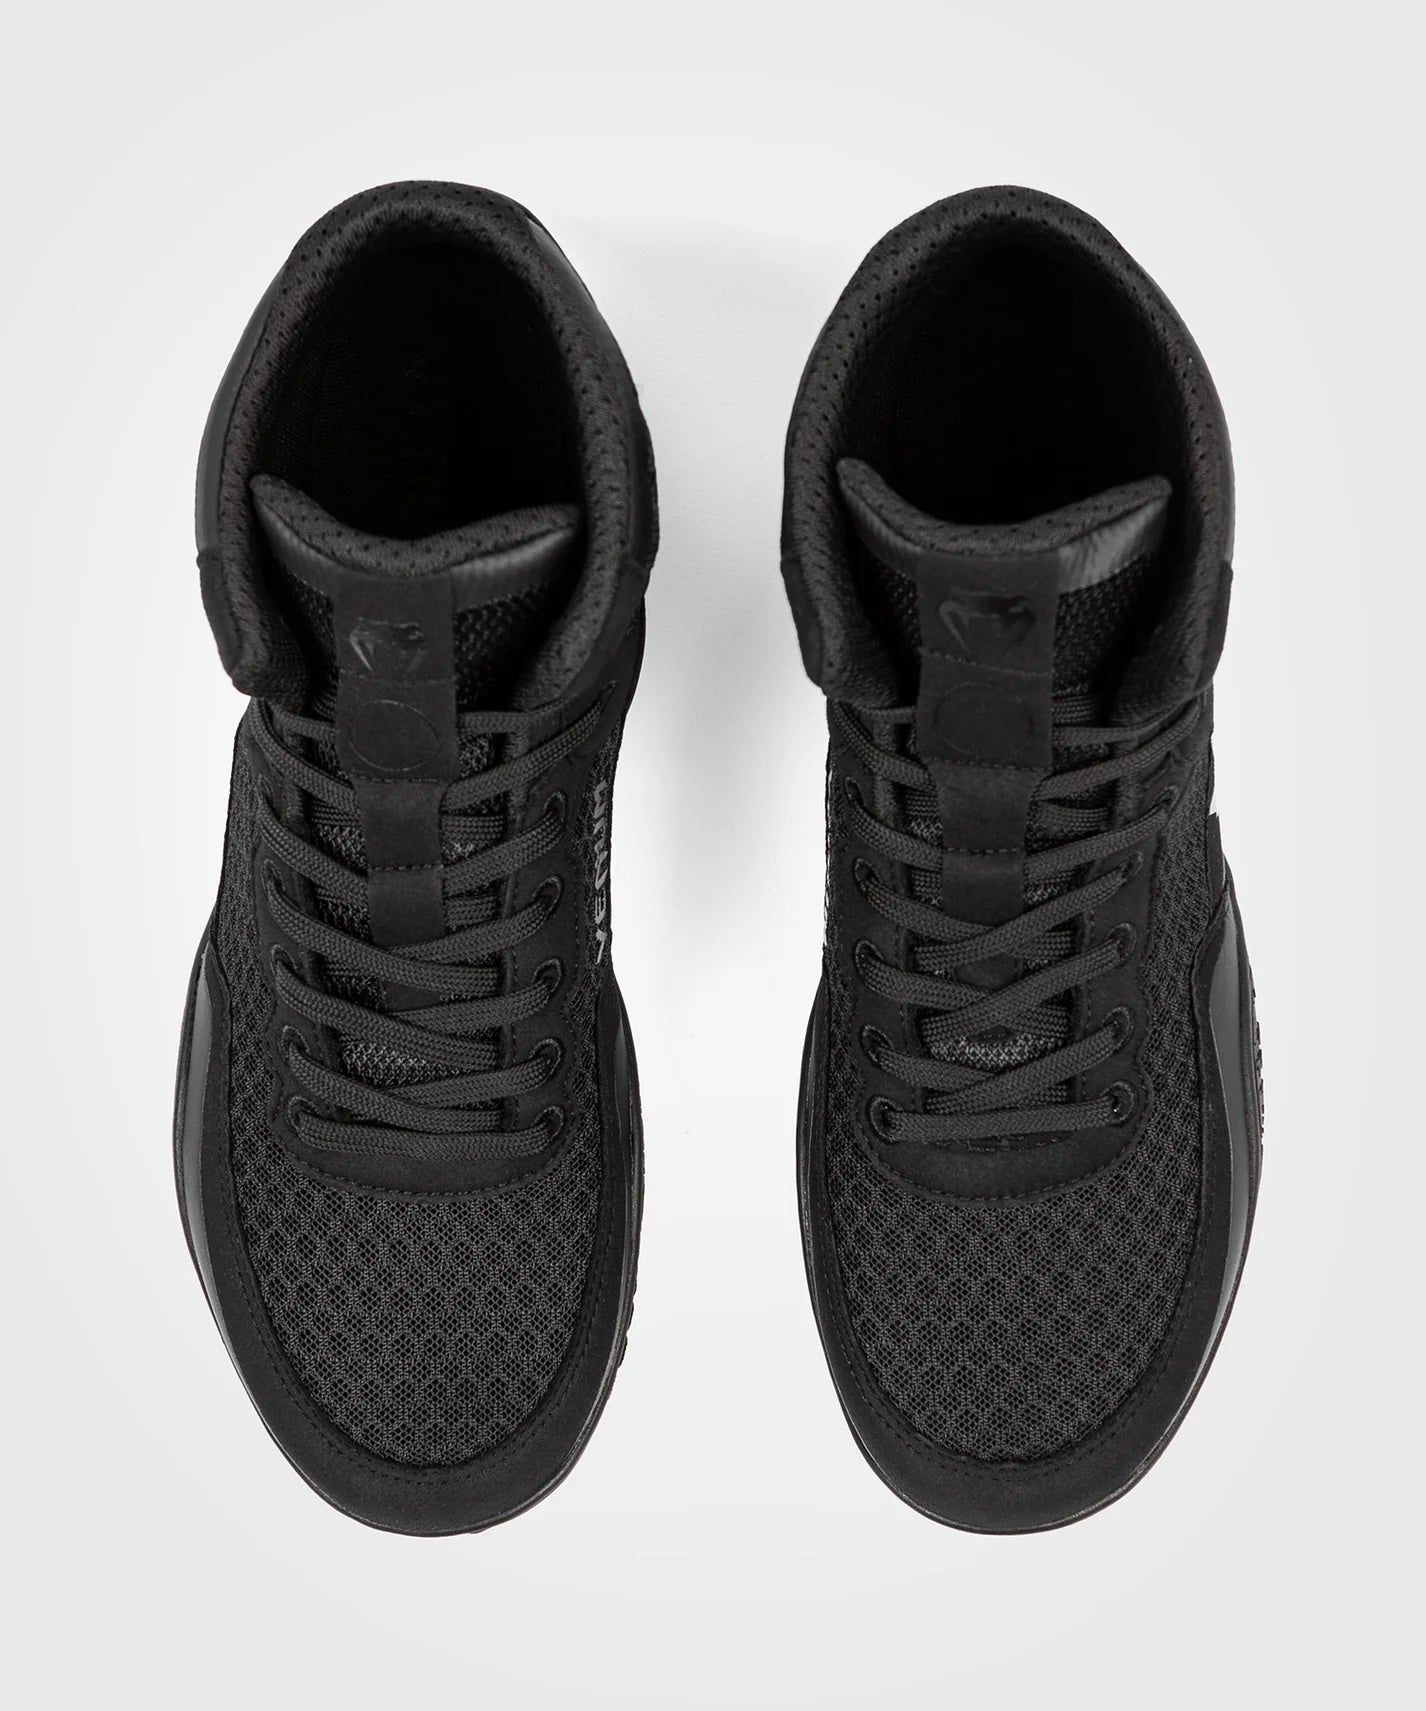 Elite Fitness Shoes - Black Black